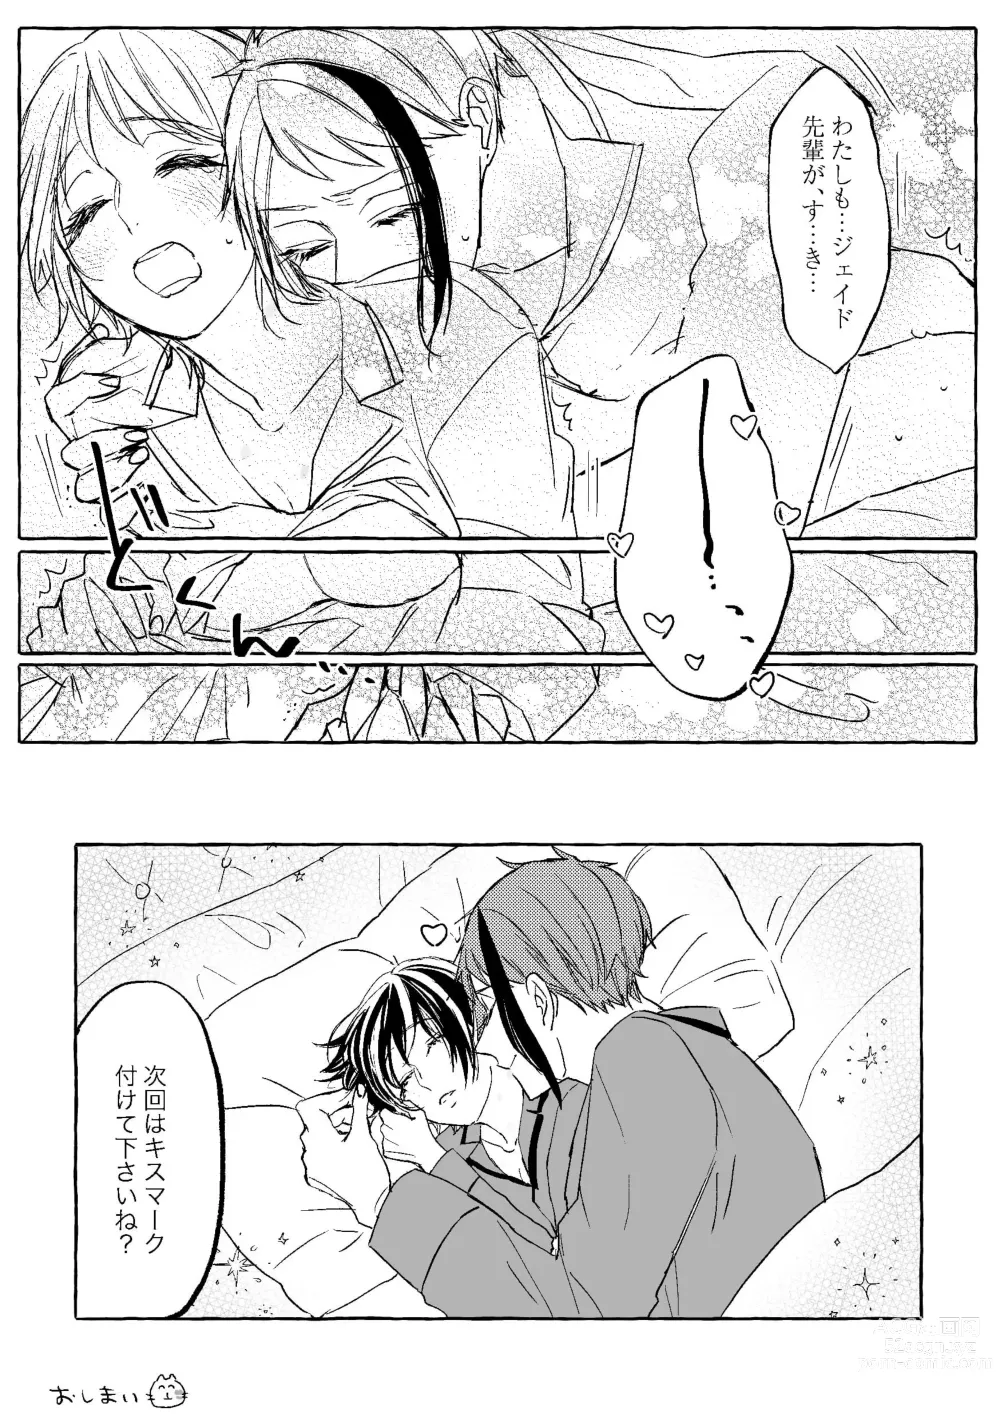 Page 140 of doujinshi Teenage Dream